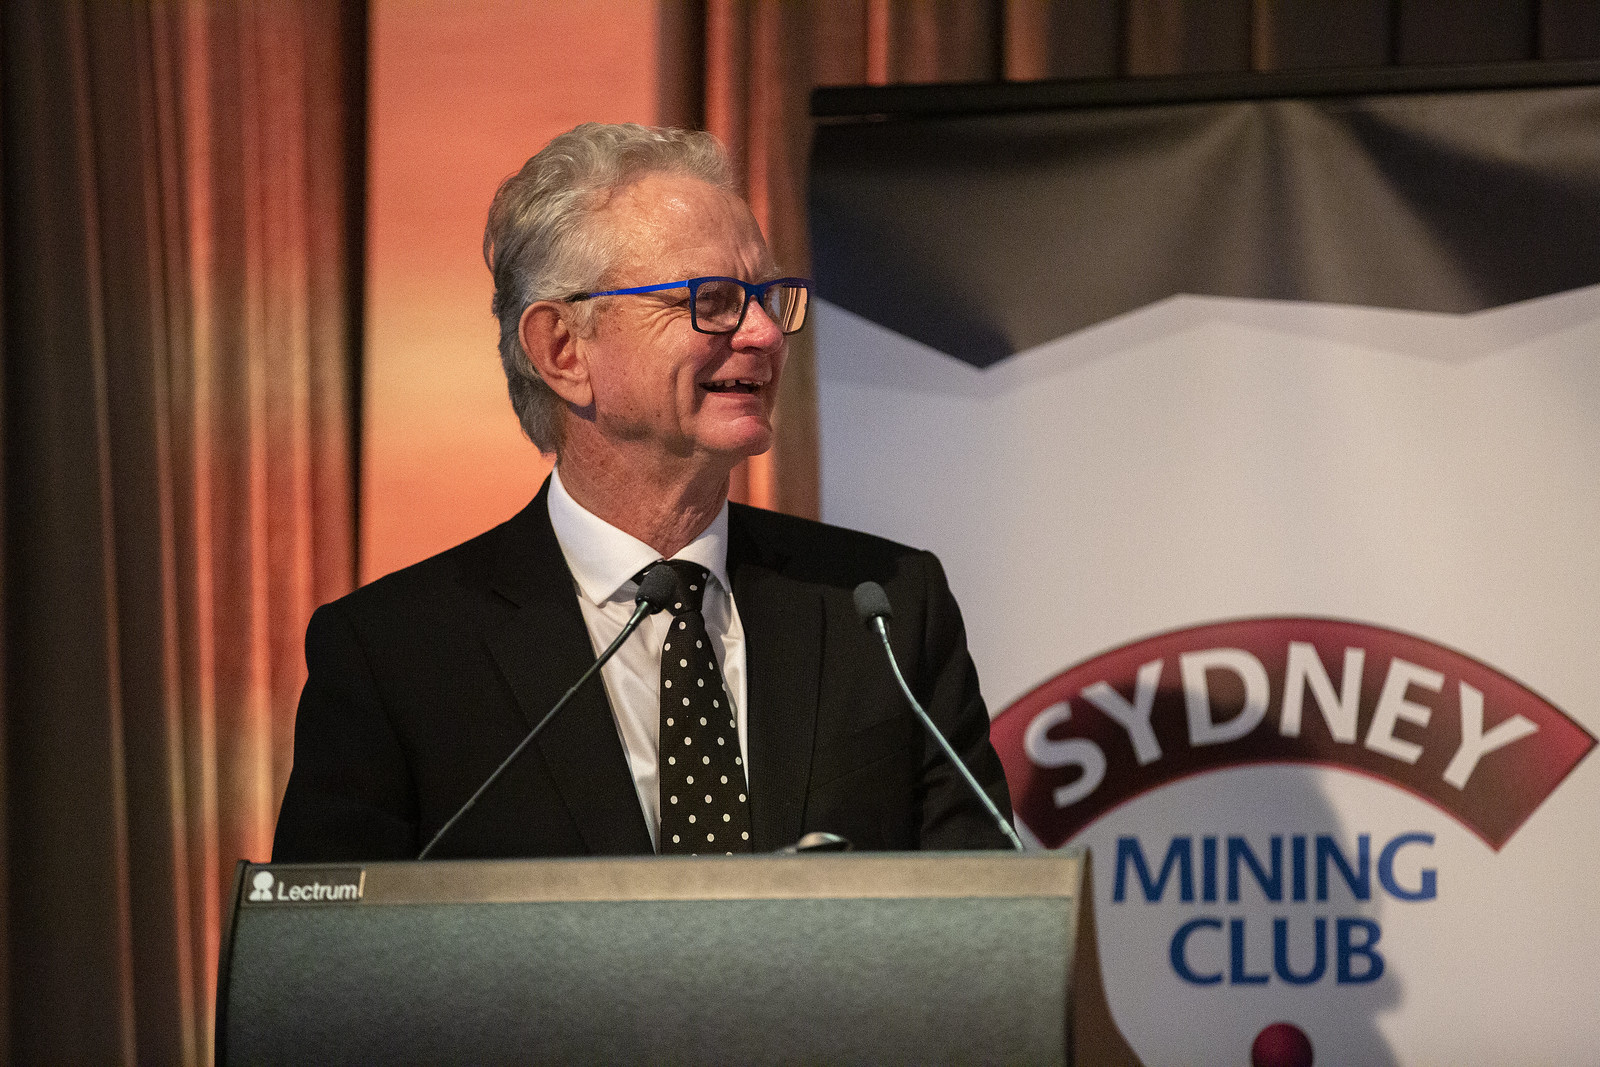 Sydney Mining Club Event – May 2022